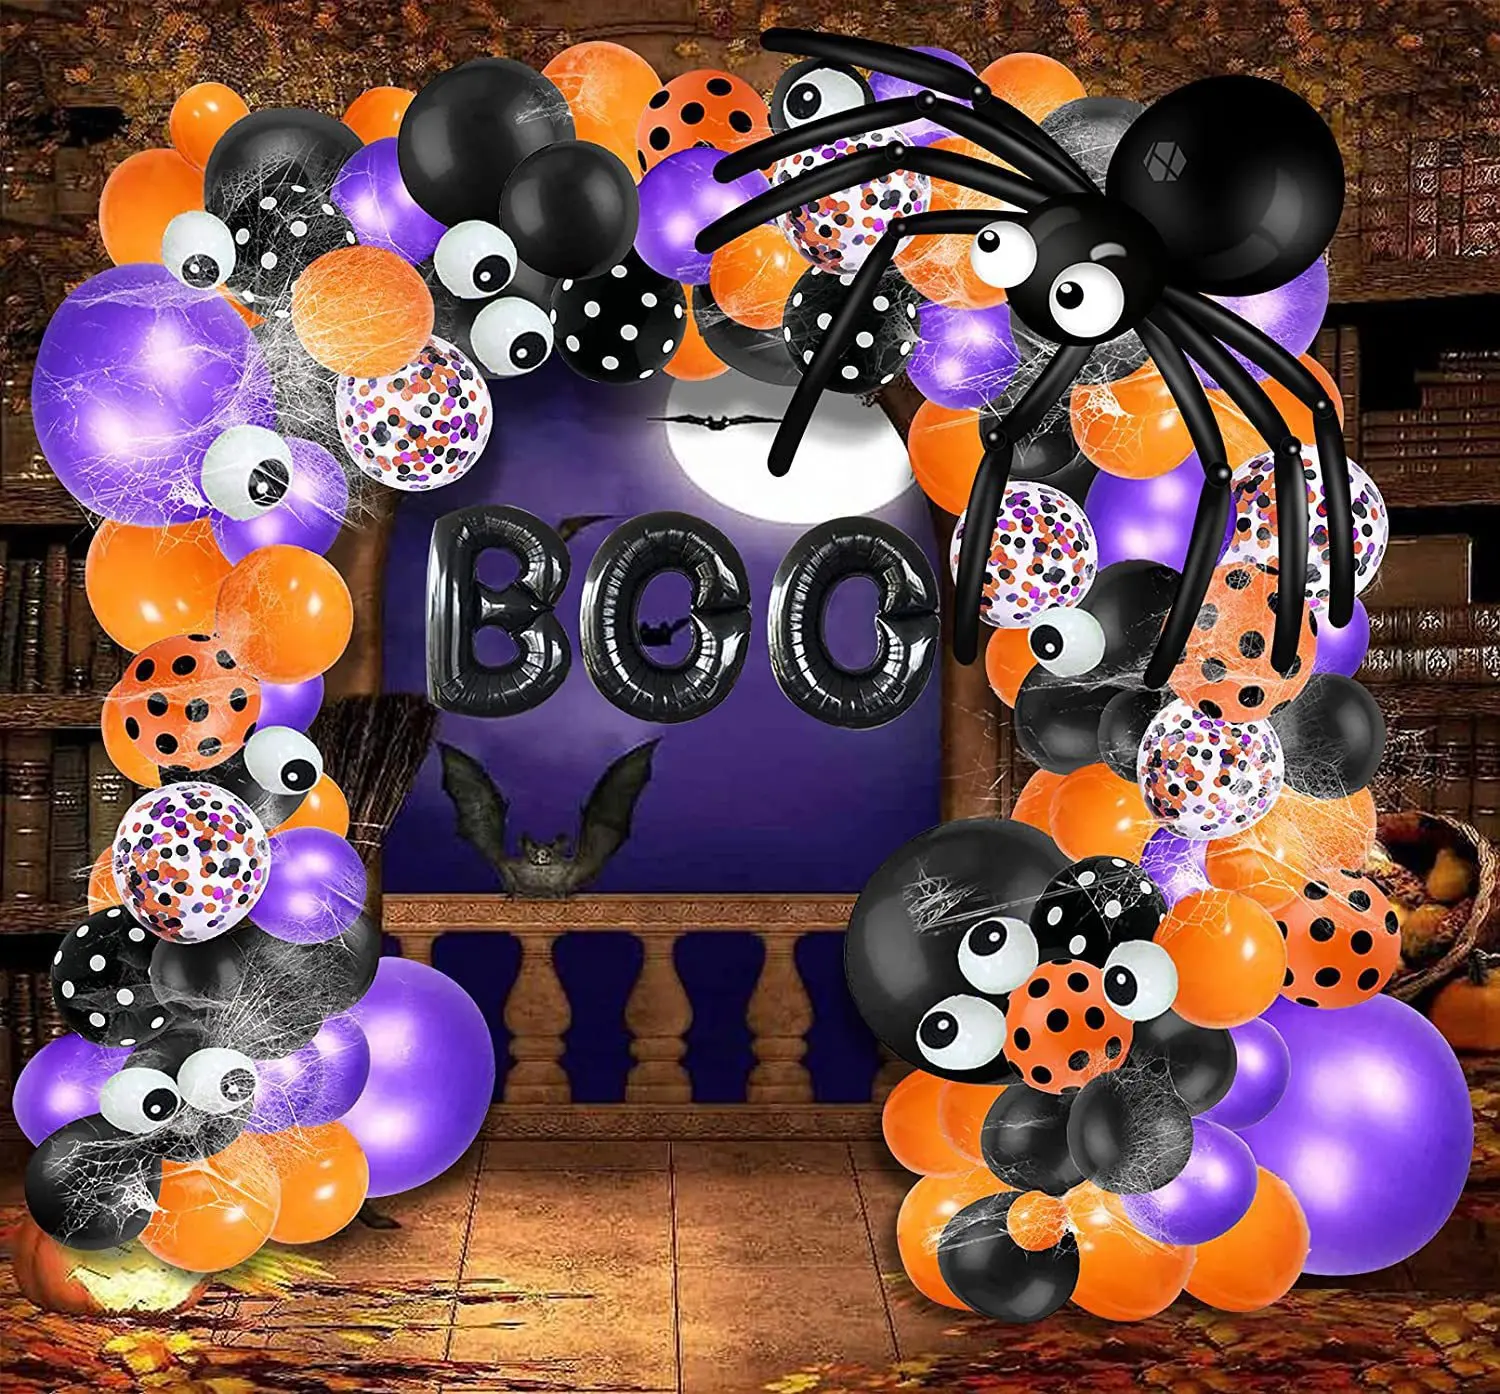 

Halloween Balloons Garland Arch Kit Bat Spider Skeleton Foil Balloons Halloween Party Home Decor Black Orange Latex Air Globos